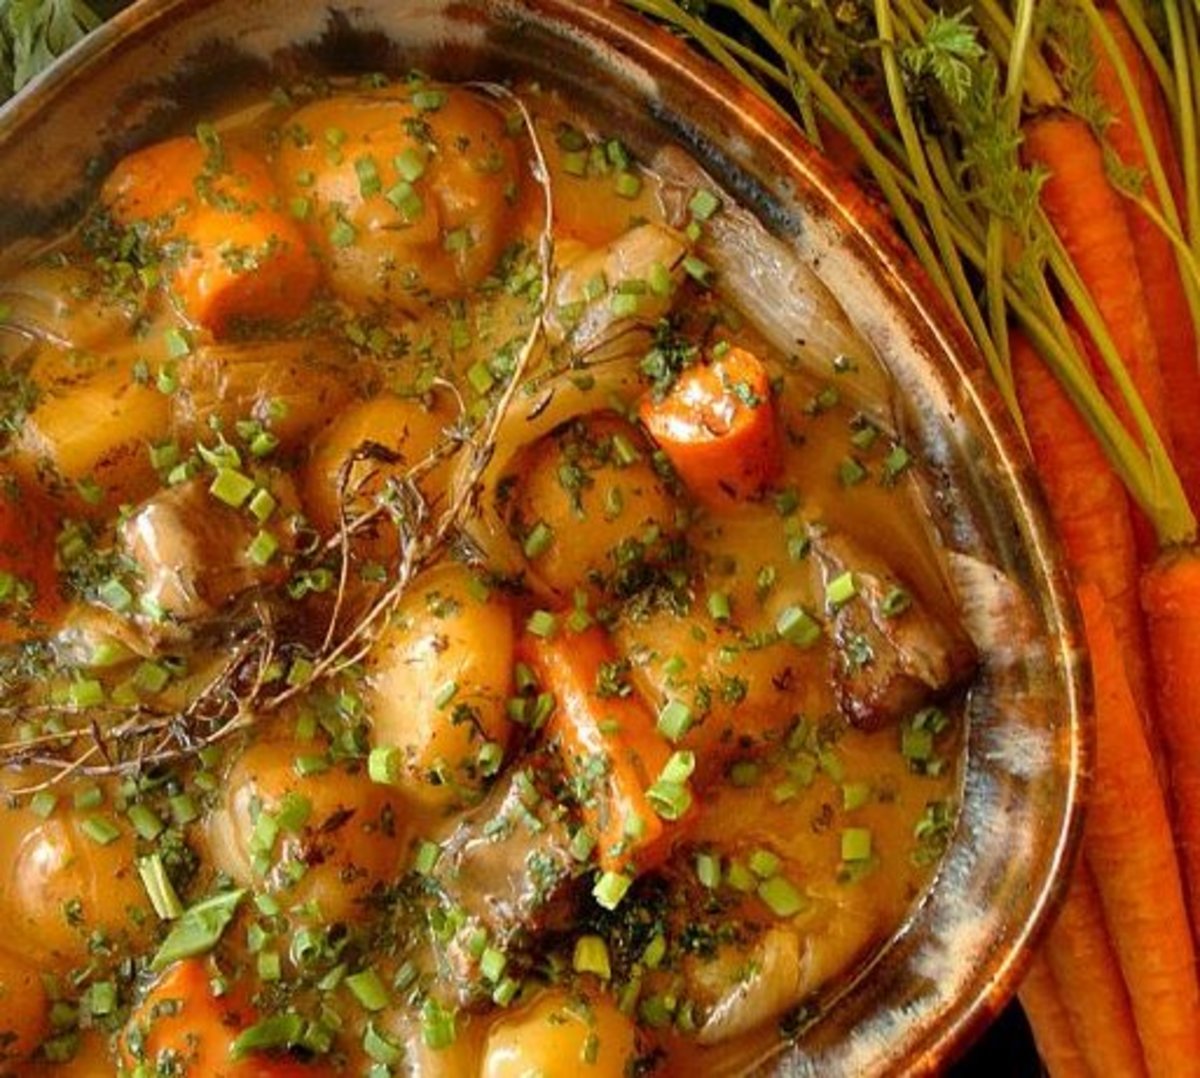 Traditional Irish Lamb Stew - The Daring Gourmet